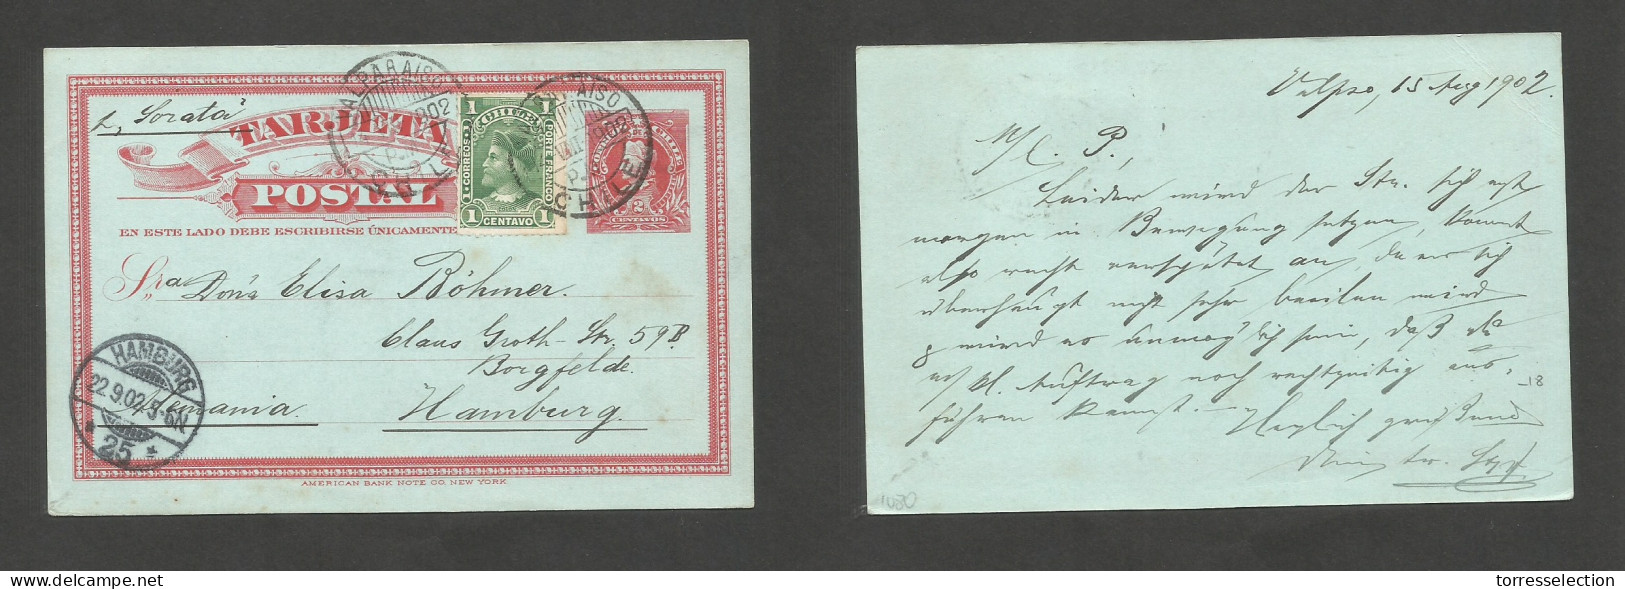 CHILE - Stationery. 1902 (15 Aug) Valp - Germany, Hamburg (22 Sept) 2c Red Stat Air + 1c Green St, Tied Cds "via Sorata" - Chili